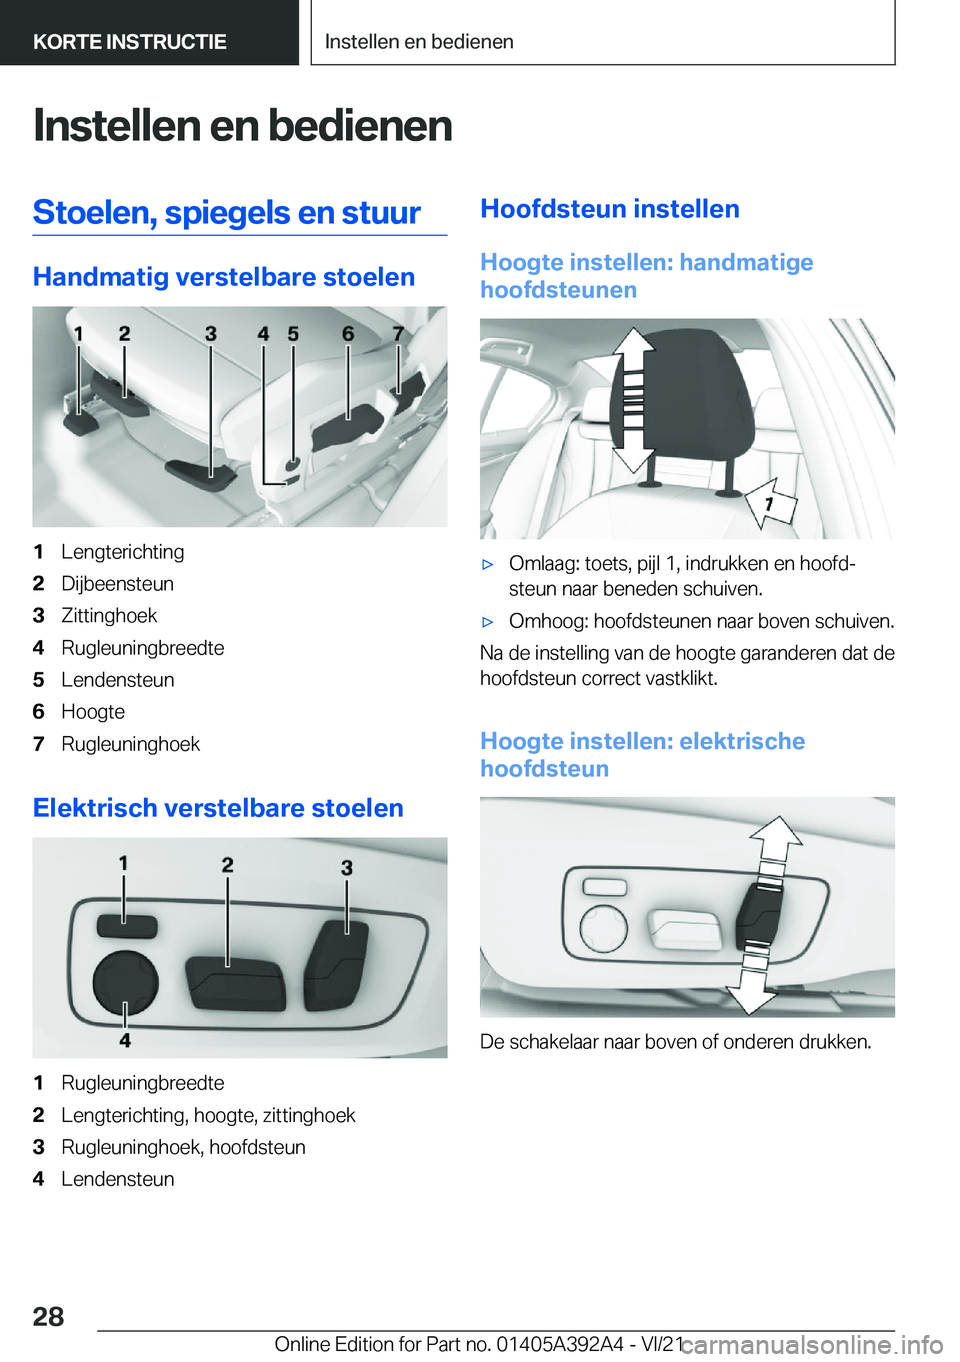 BMW 4 SERIES 2022  Instructieboekjes (in Dutch) �I�n�s�t�e�l�l�e�n��e�n��b�e�d�i�e�n�e�n�S�t�o�e�l�e�n�,��s�p�i�e�g�e�l�s��e�n��s�t�u�u�r
�H�a�n�d�m�a�t�i�g��v�e�r�s�t�e�l�b�a�r�e��s�t�o�e�l�e�n
�1�L�e�n�g�t�e�r�i�c�h�t�i�n�g�2�D�i�j�b�e�e�n